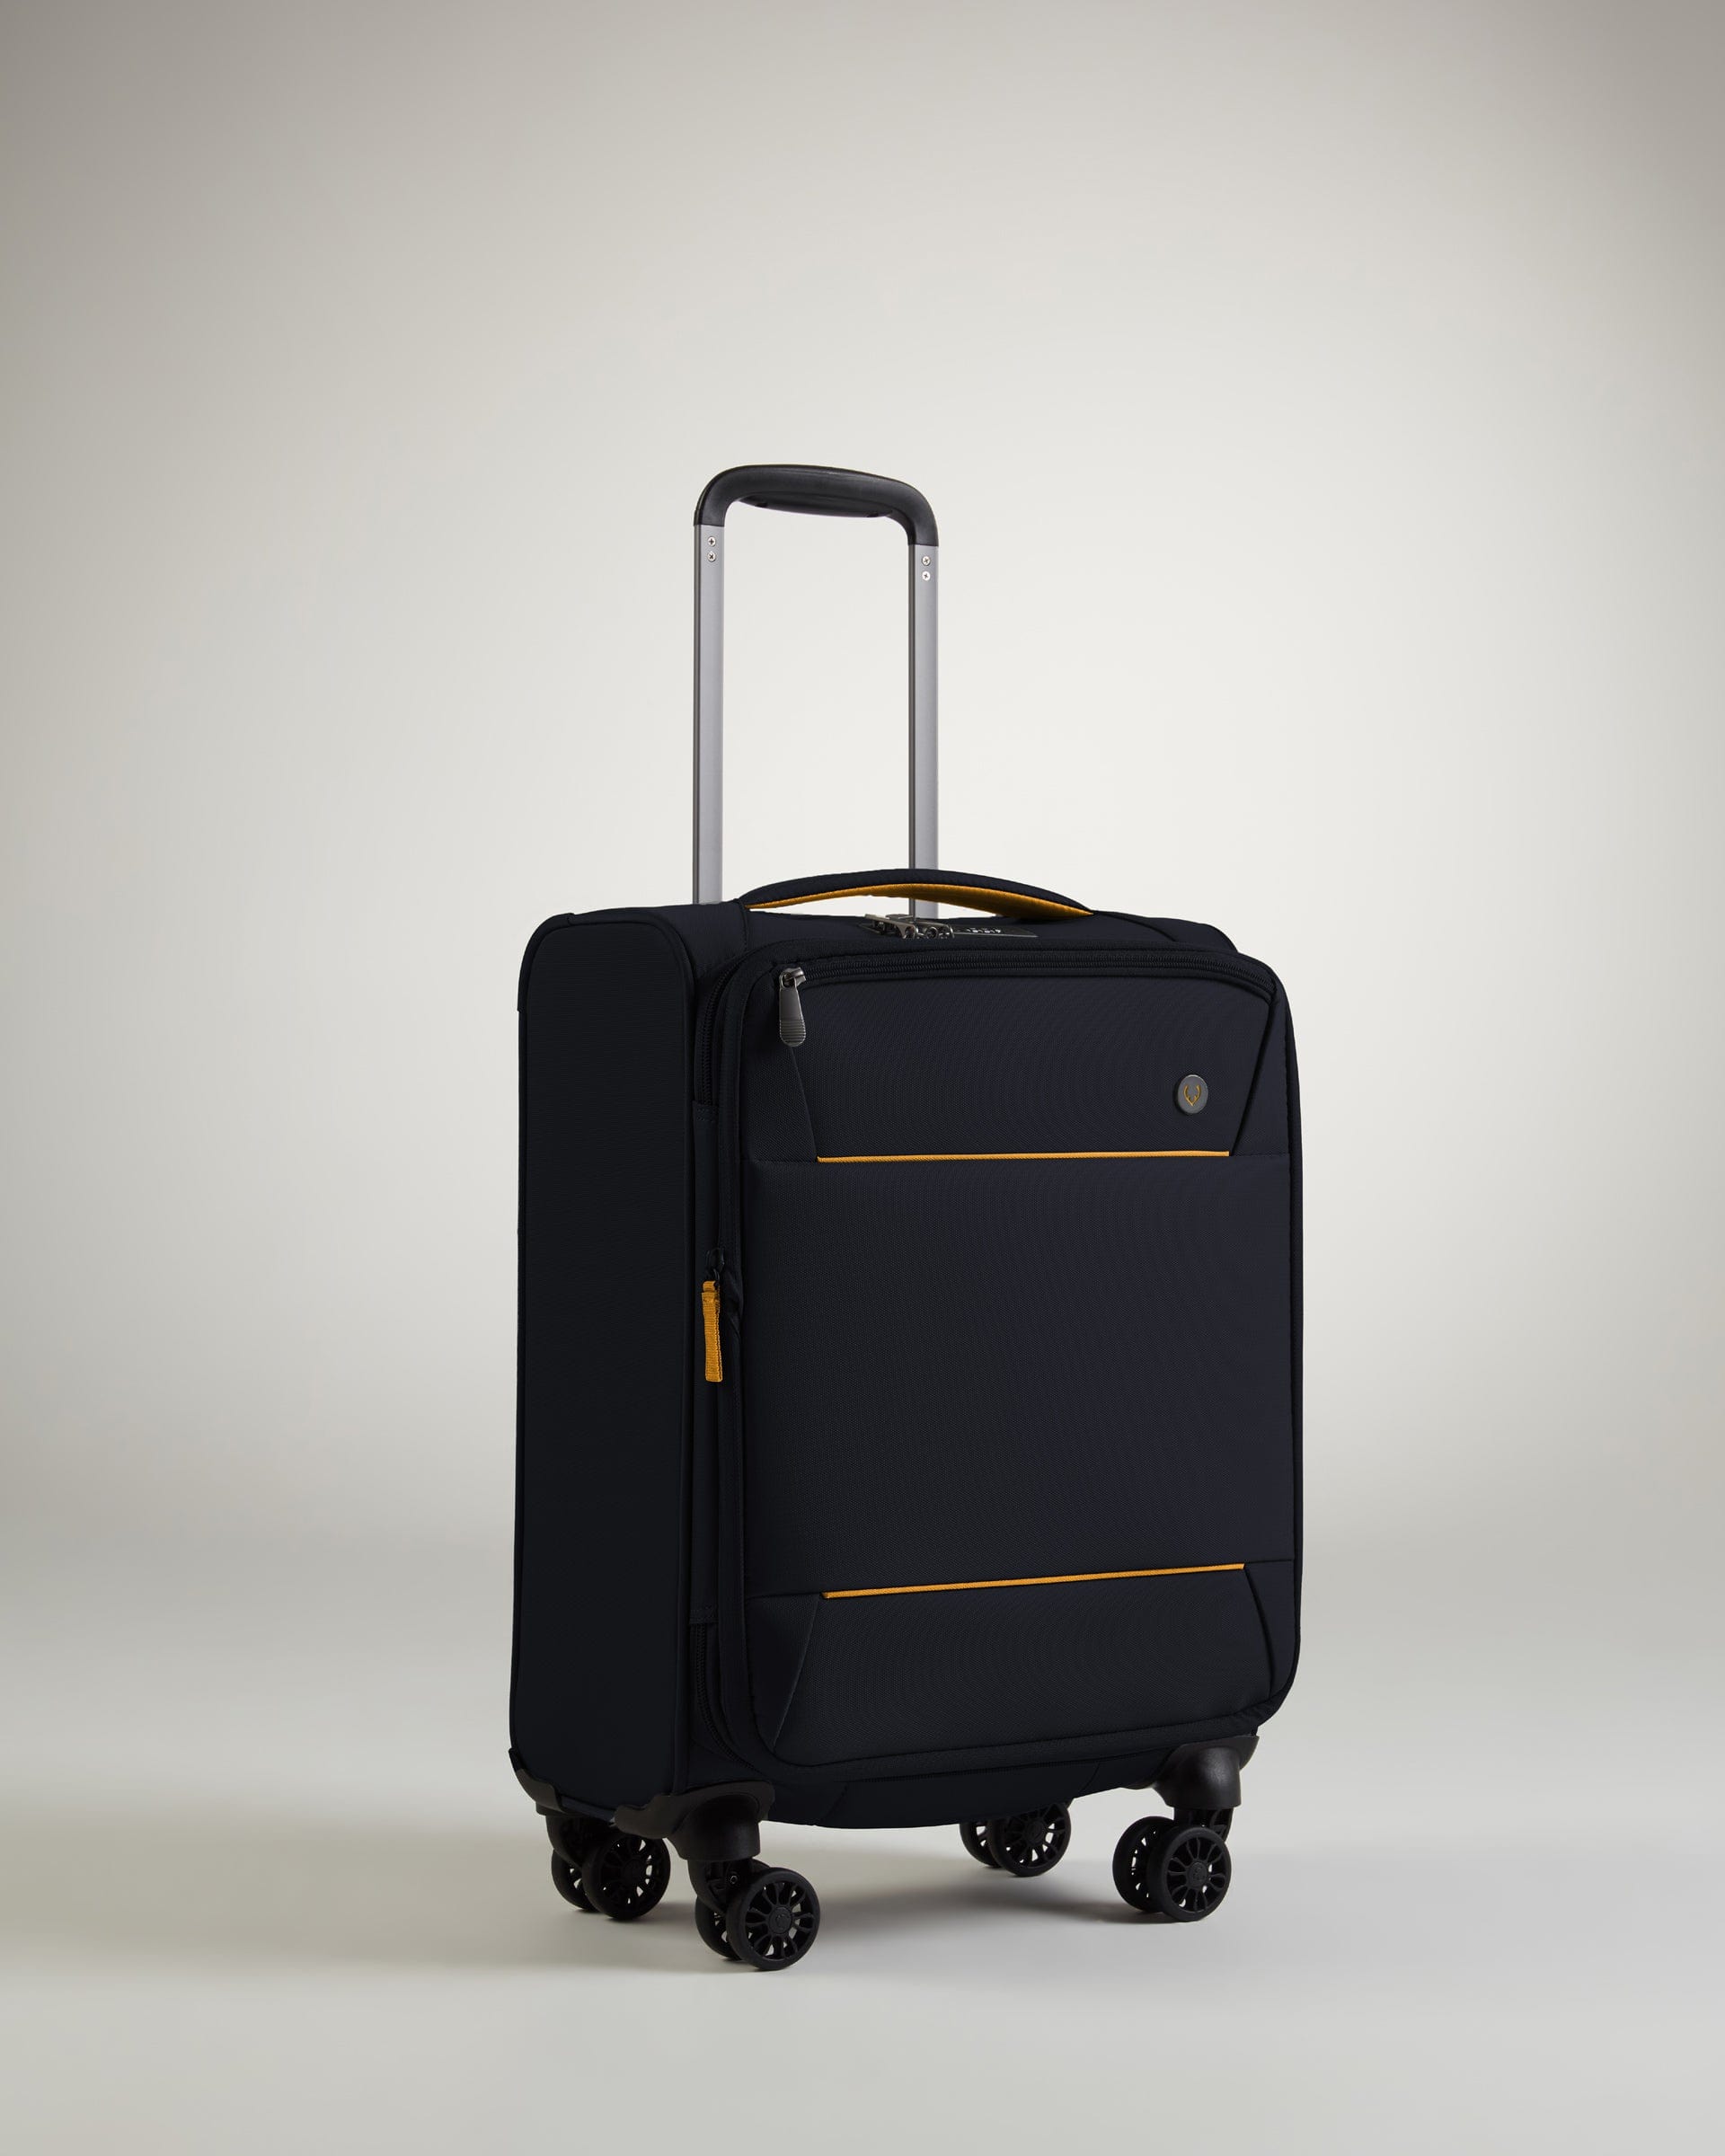 View Antler Brixham Cabin Suitcase In Black Size 55 x 35 x 20 cm information